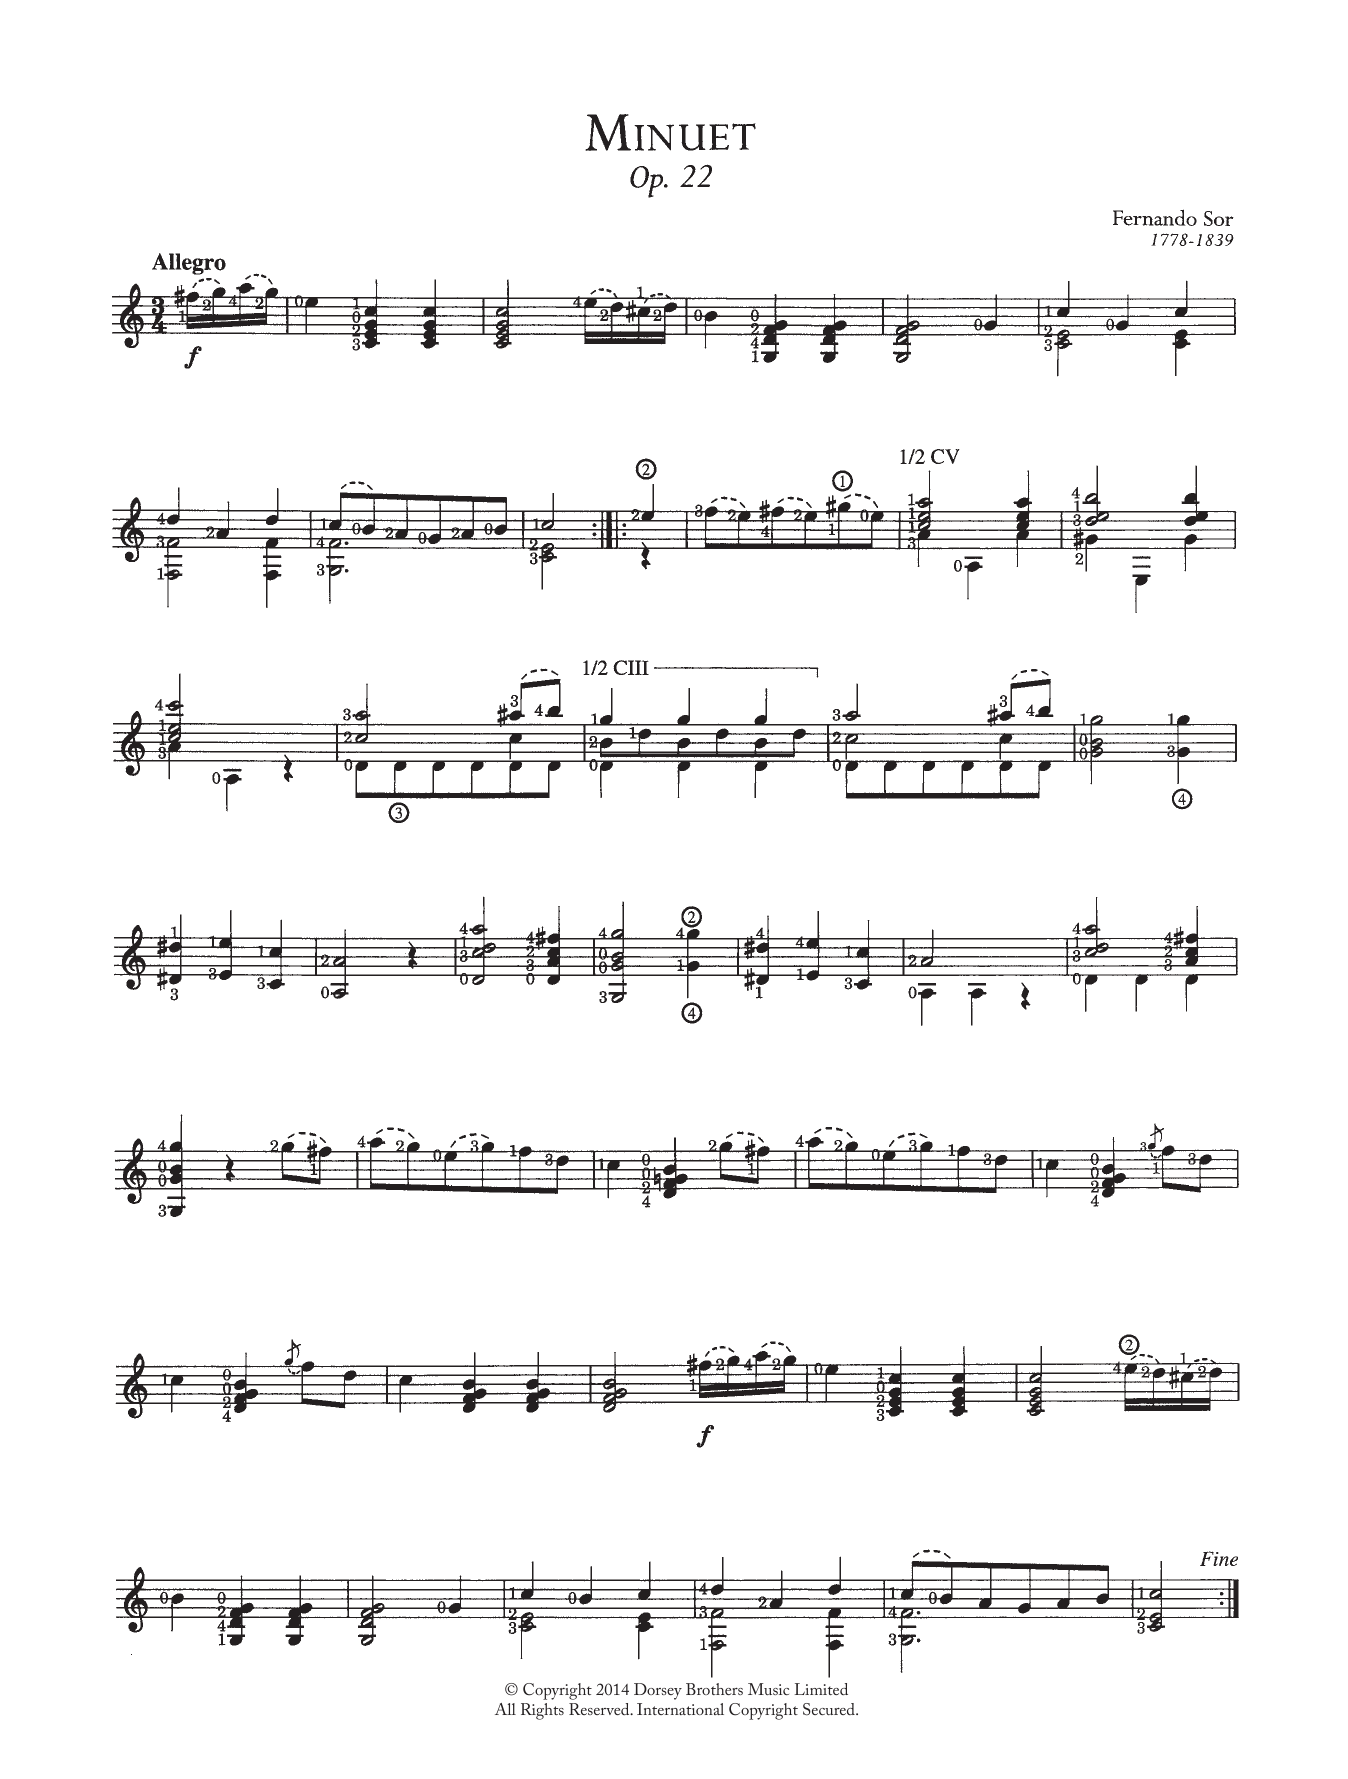 Fernando Sor Minuet, Op.22 Sheet Music Notes & Chords for Guitar - Download or Print PDF